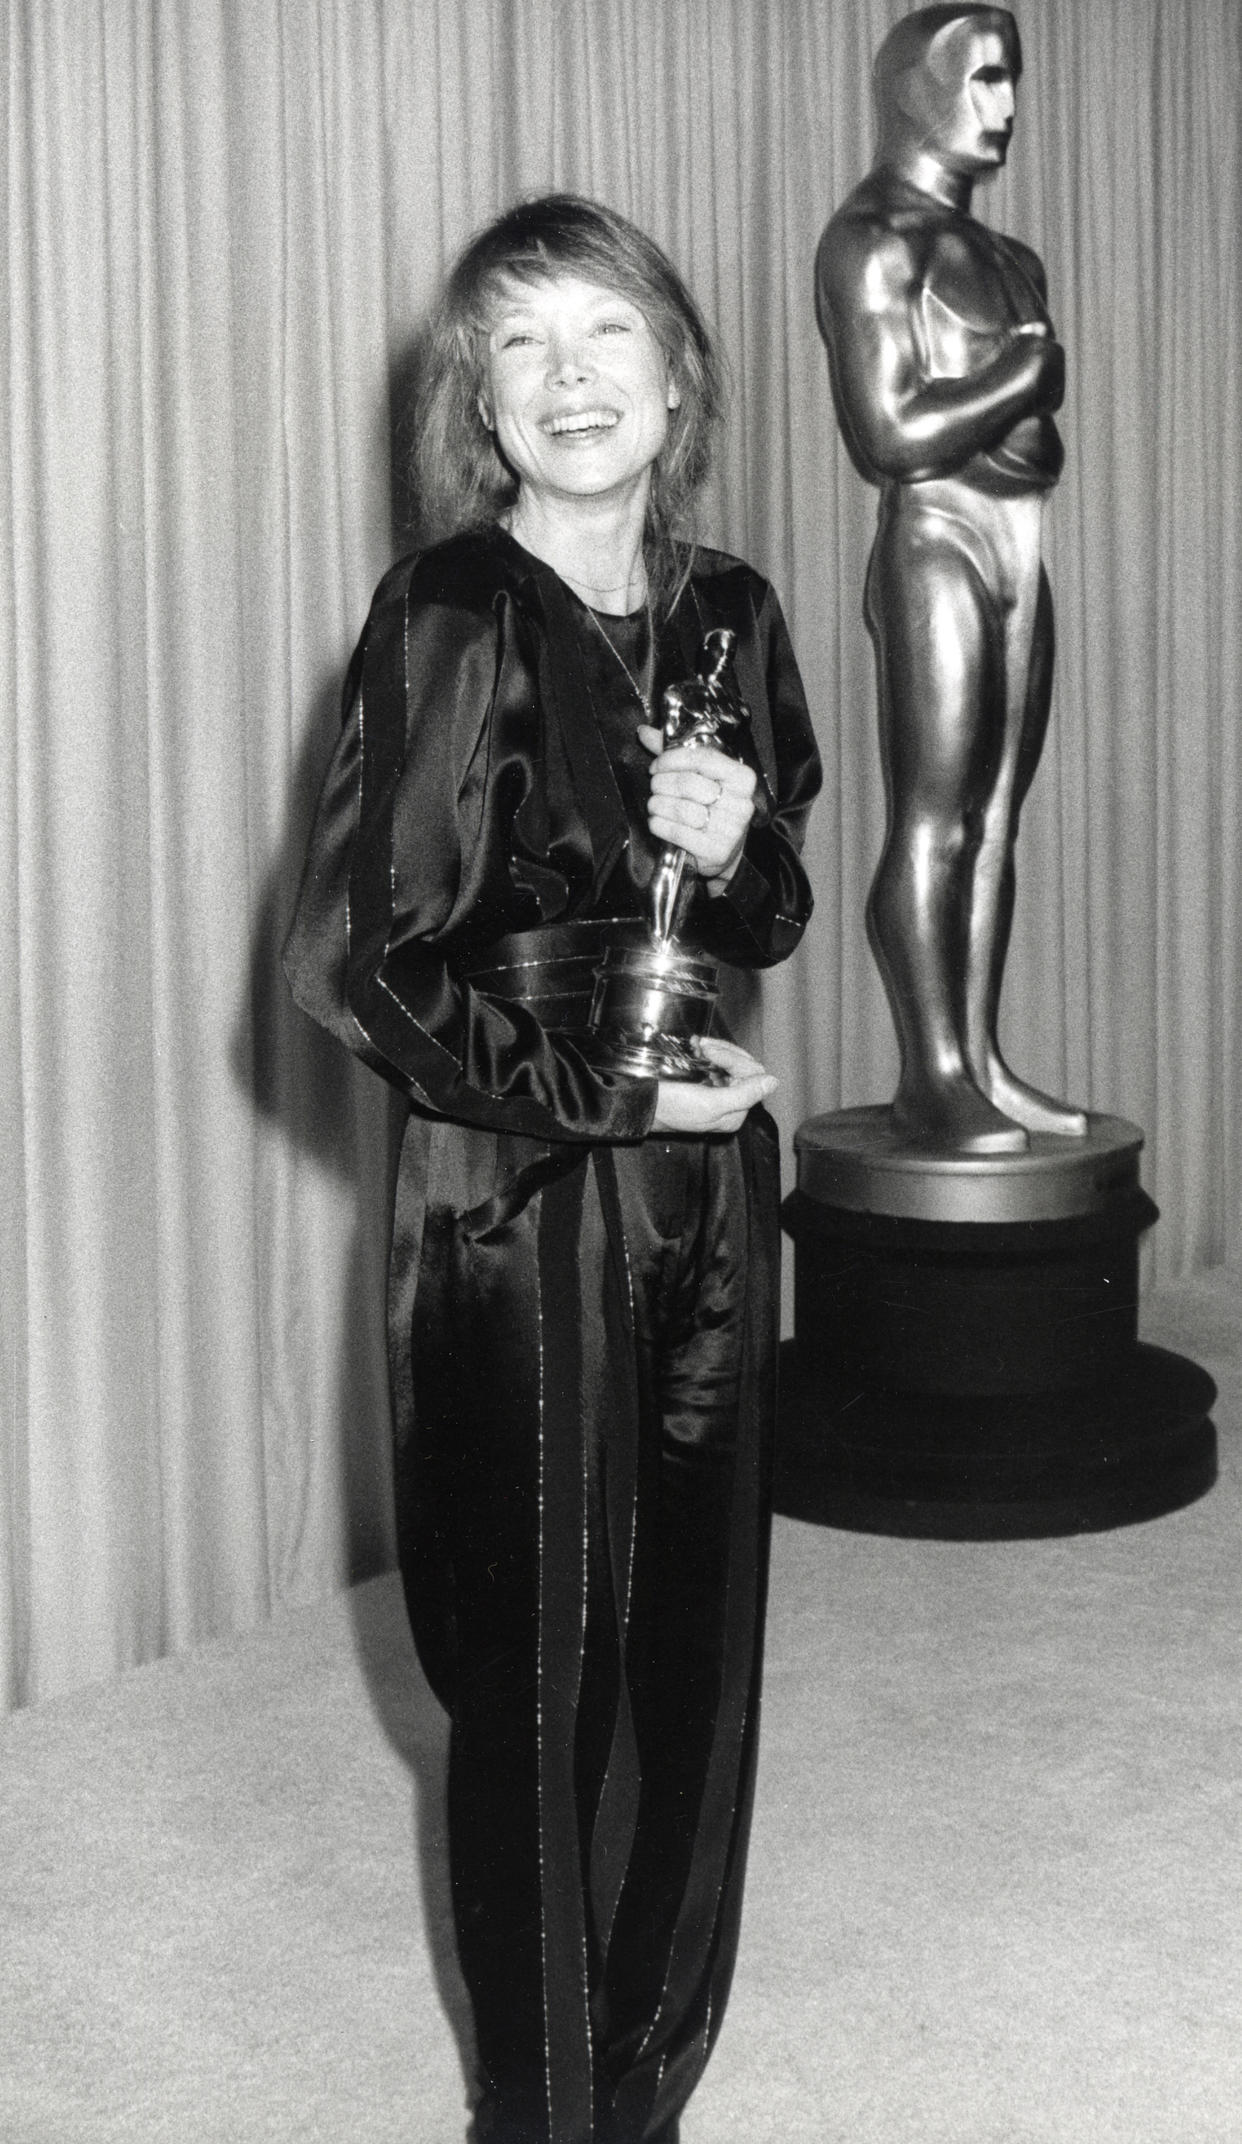 Sissy Spacek Oscars 1981 (Ron Galella / WireImage)